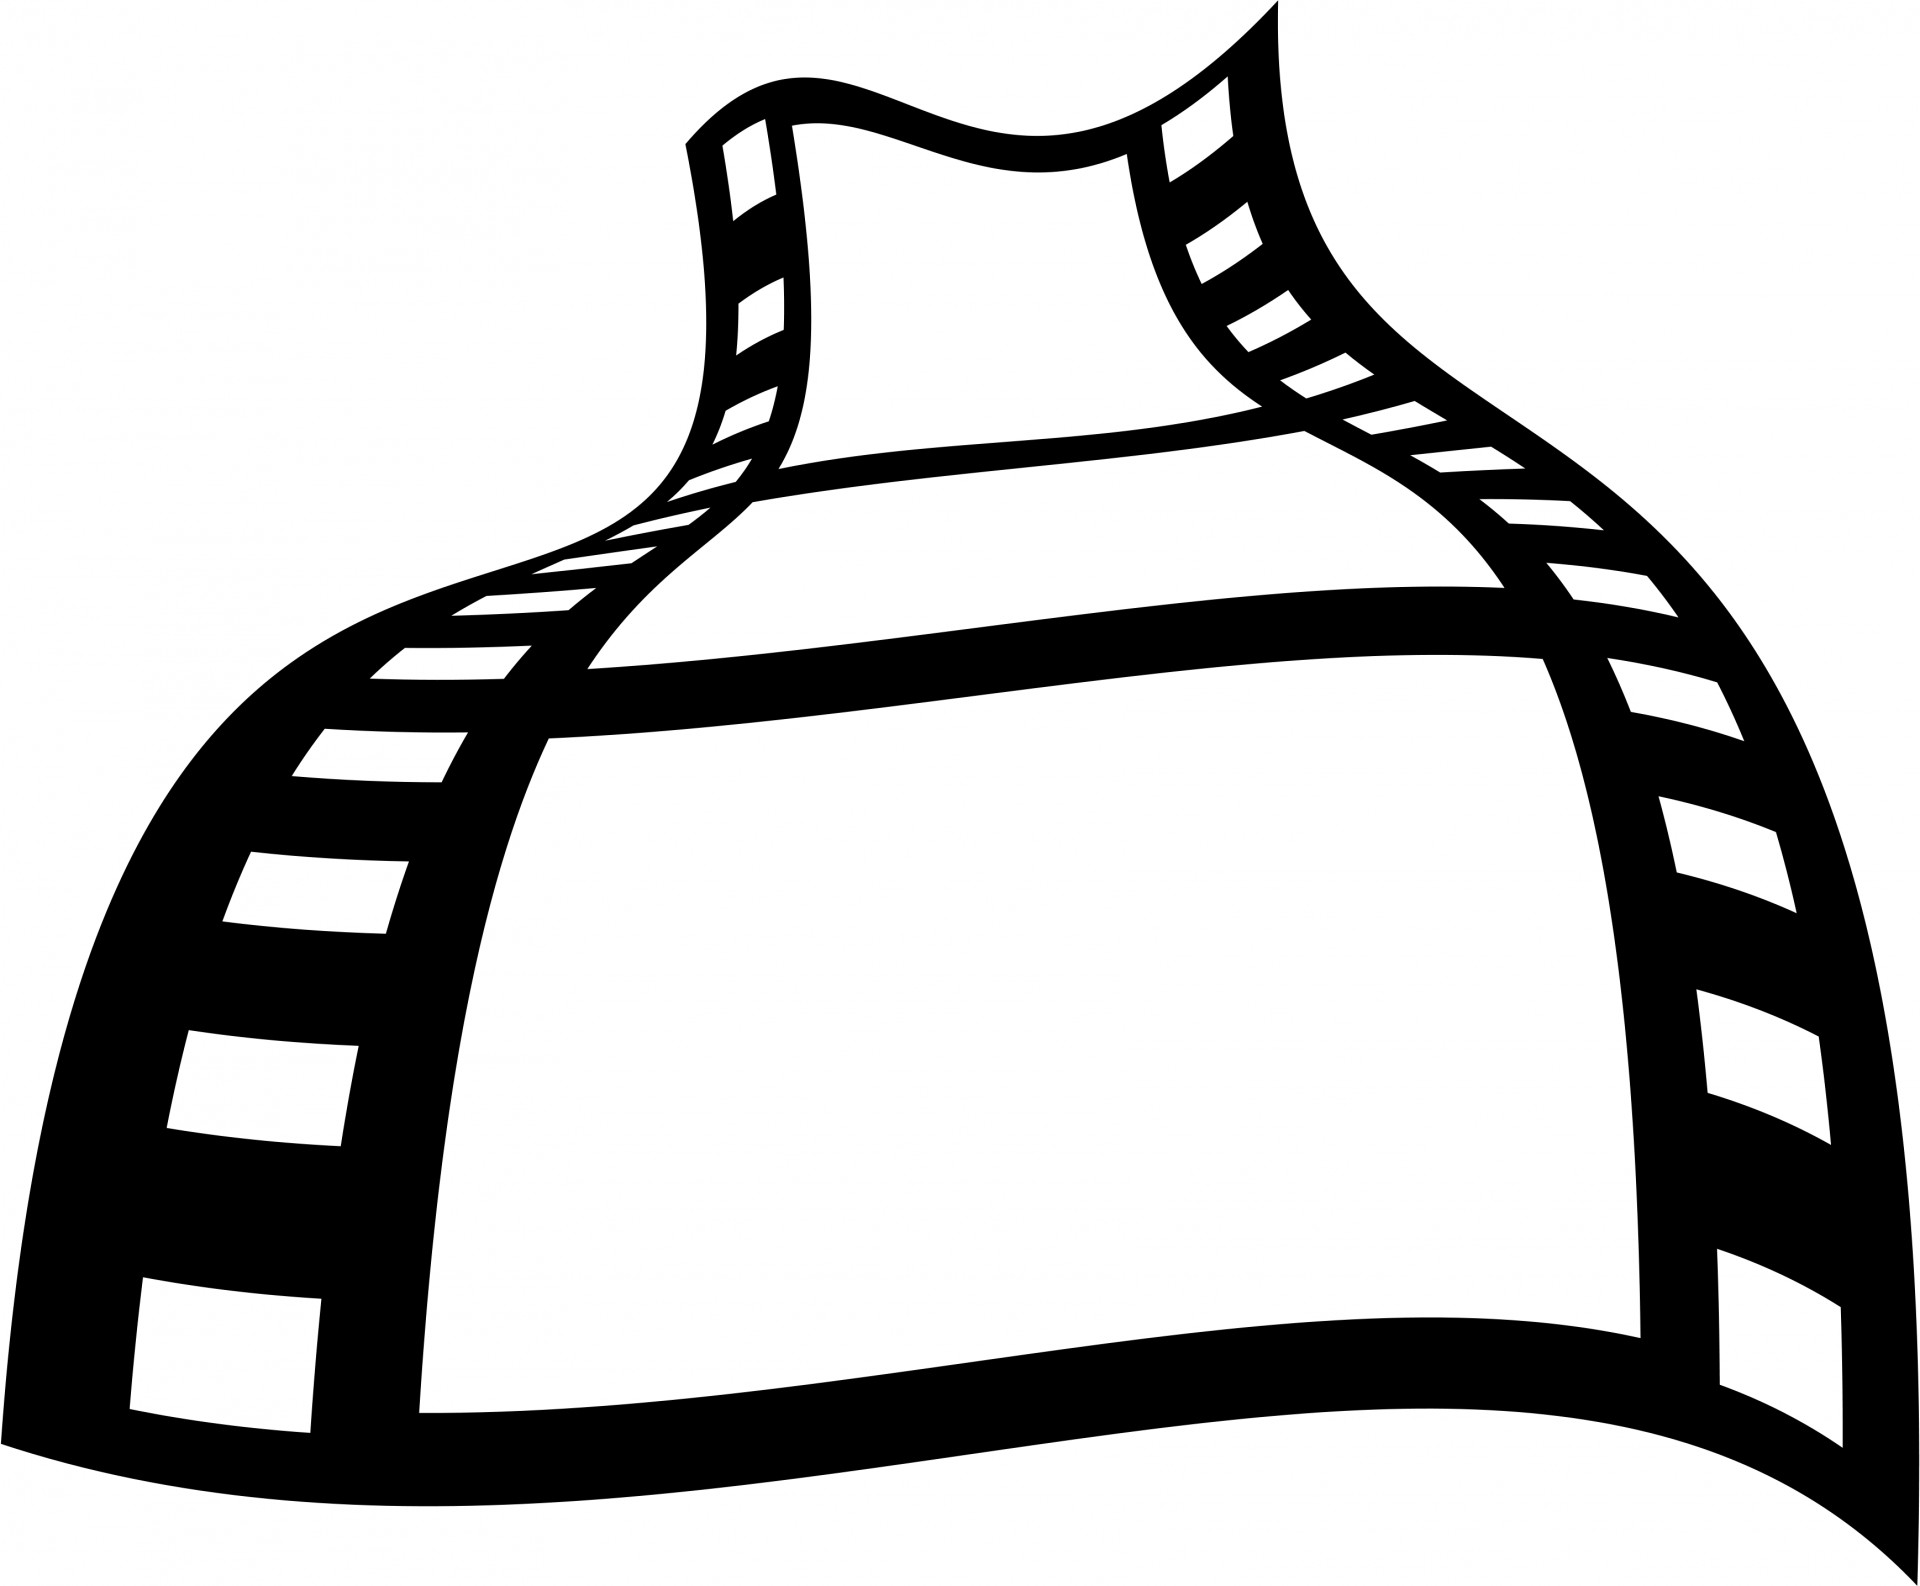 Film strip movie reel vector clipart clipartix